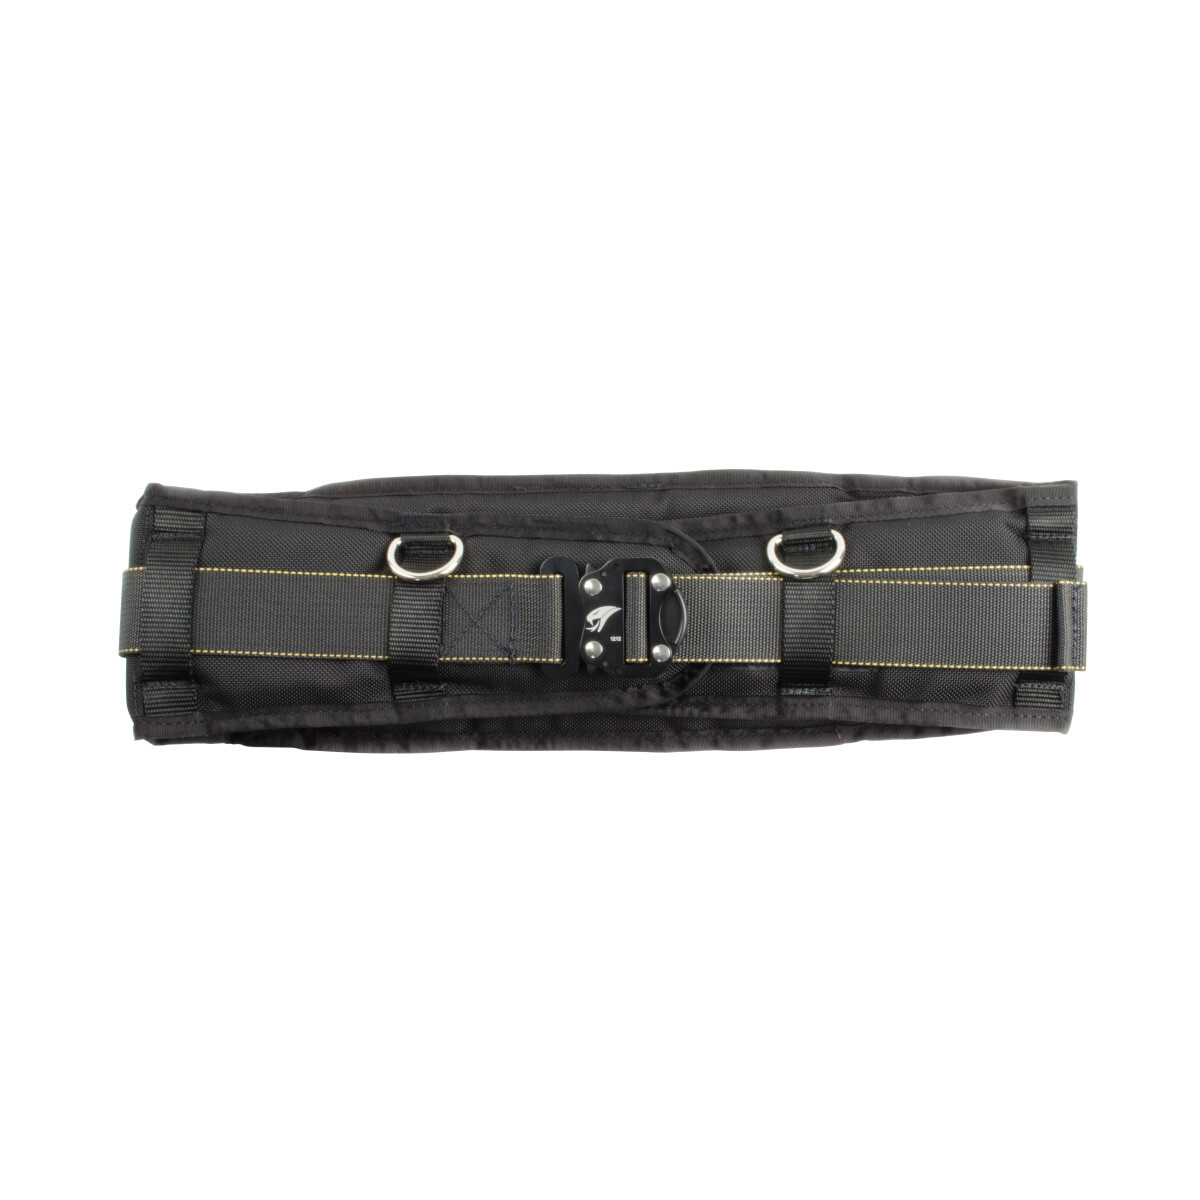 3M™ Comfort Tool Belt With Hip Pad 1500112, 2X/3X, 44 - 52 in Waist